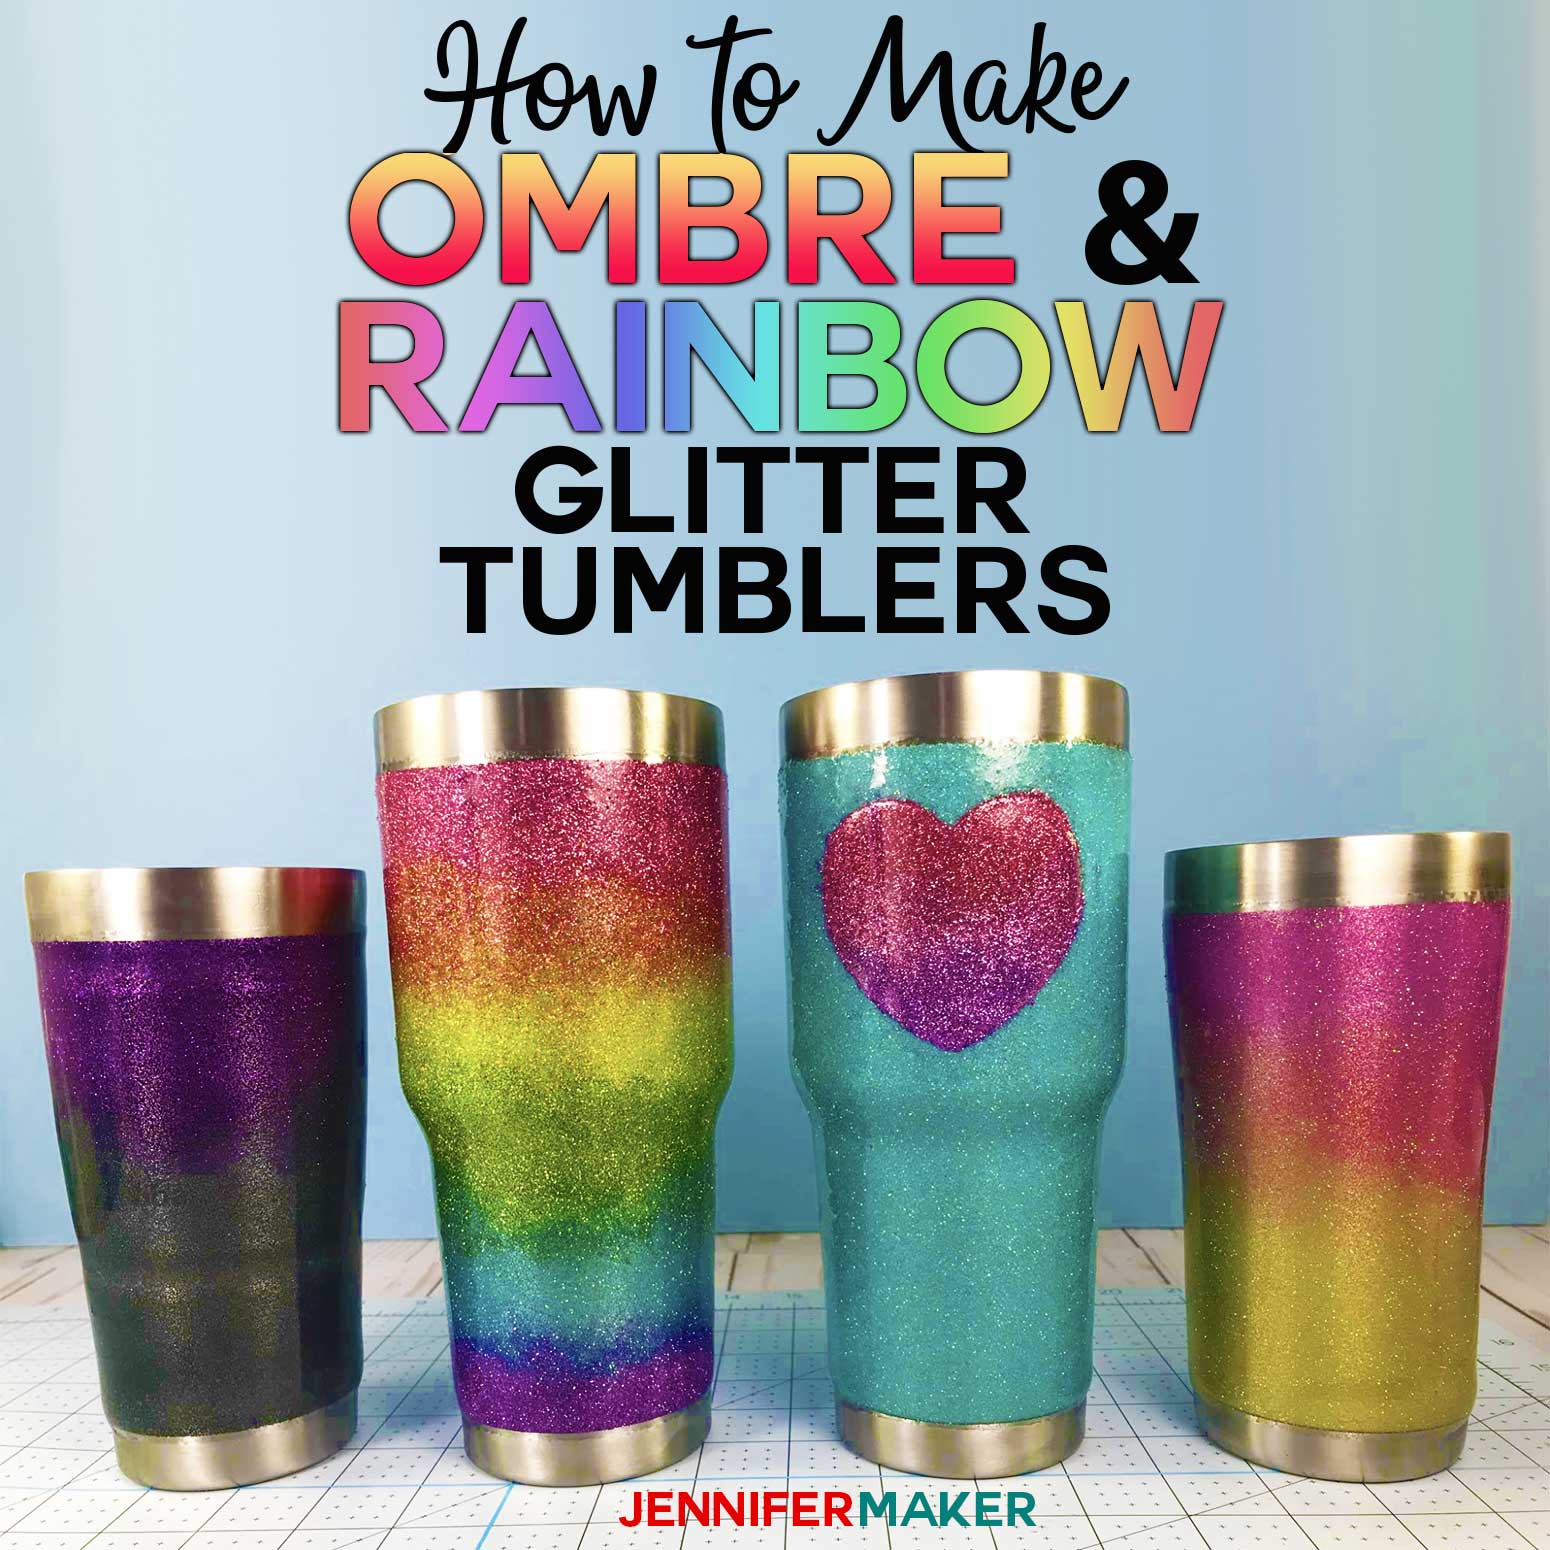 Ombre Glitter Tumbler Tutorial (+ Rainbows!)